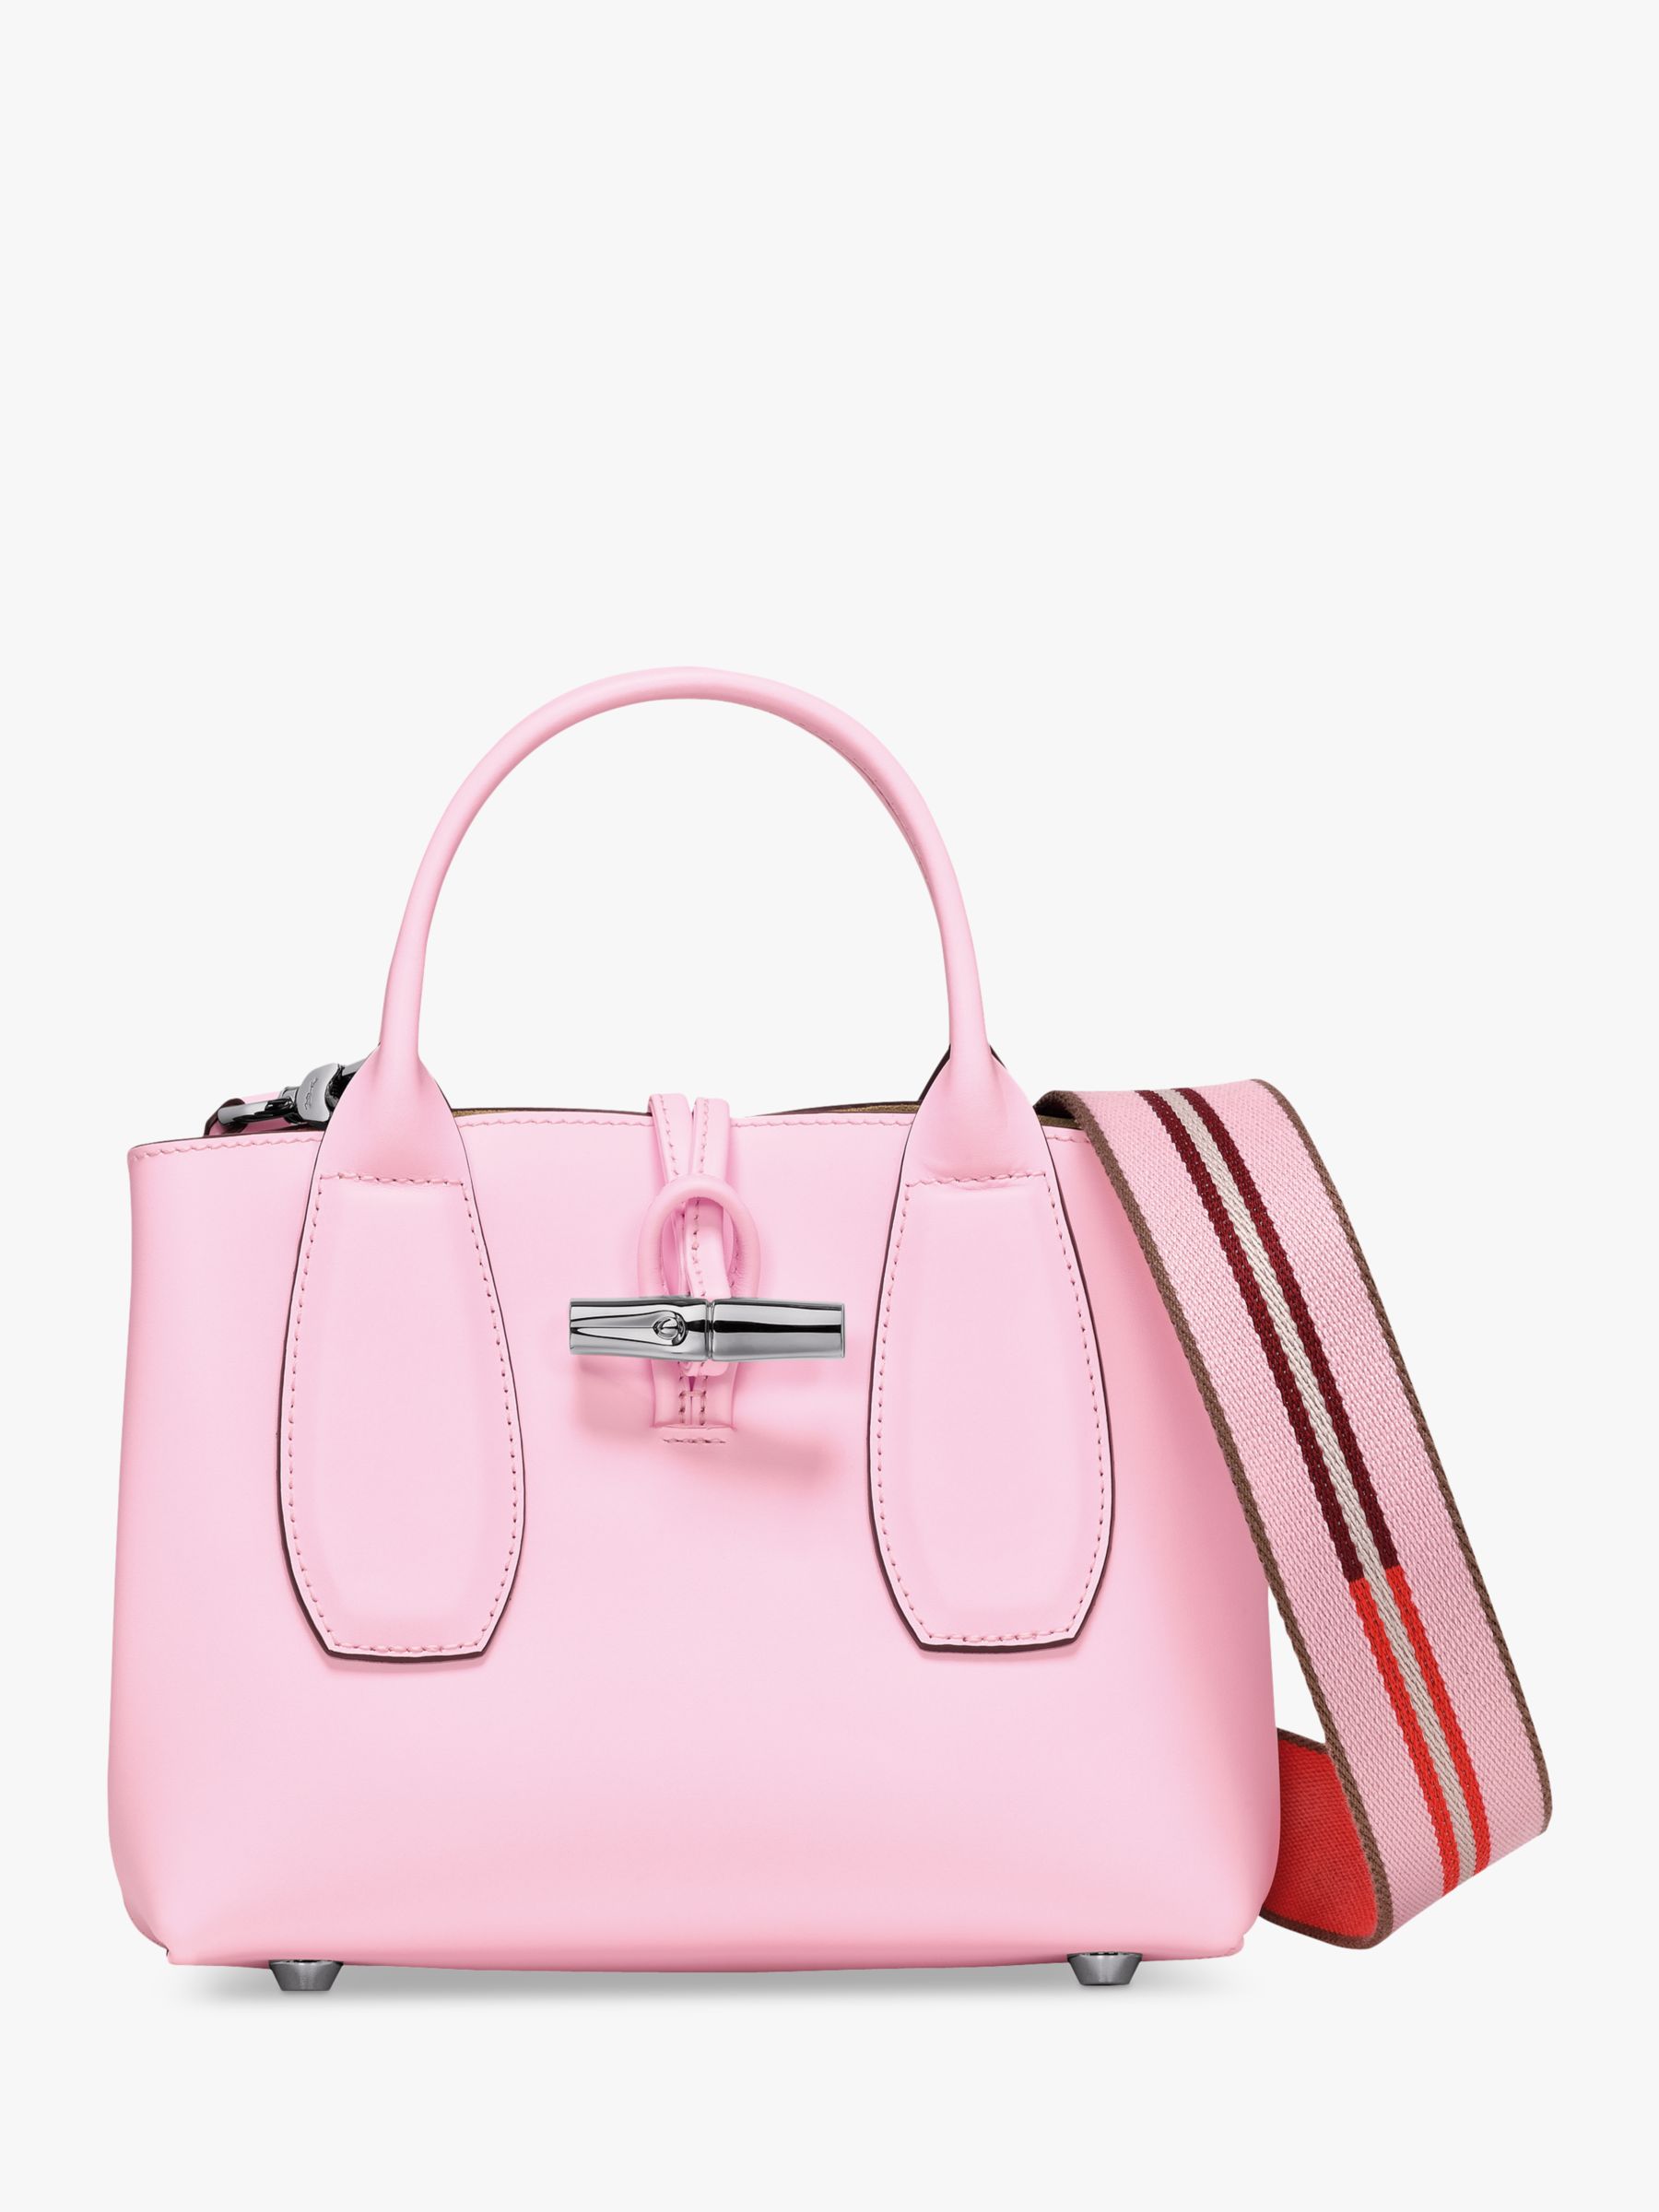 Longchamp Roseau Small Top Handle Bag, Pink at John Lewis & Partners